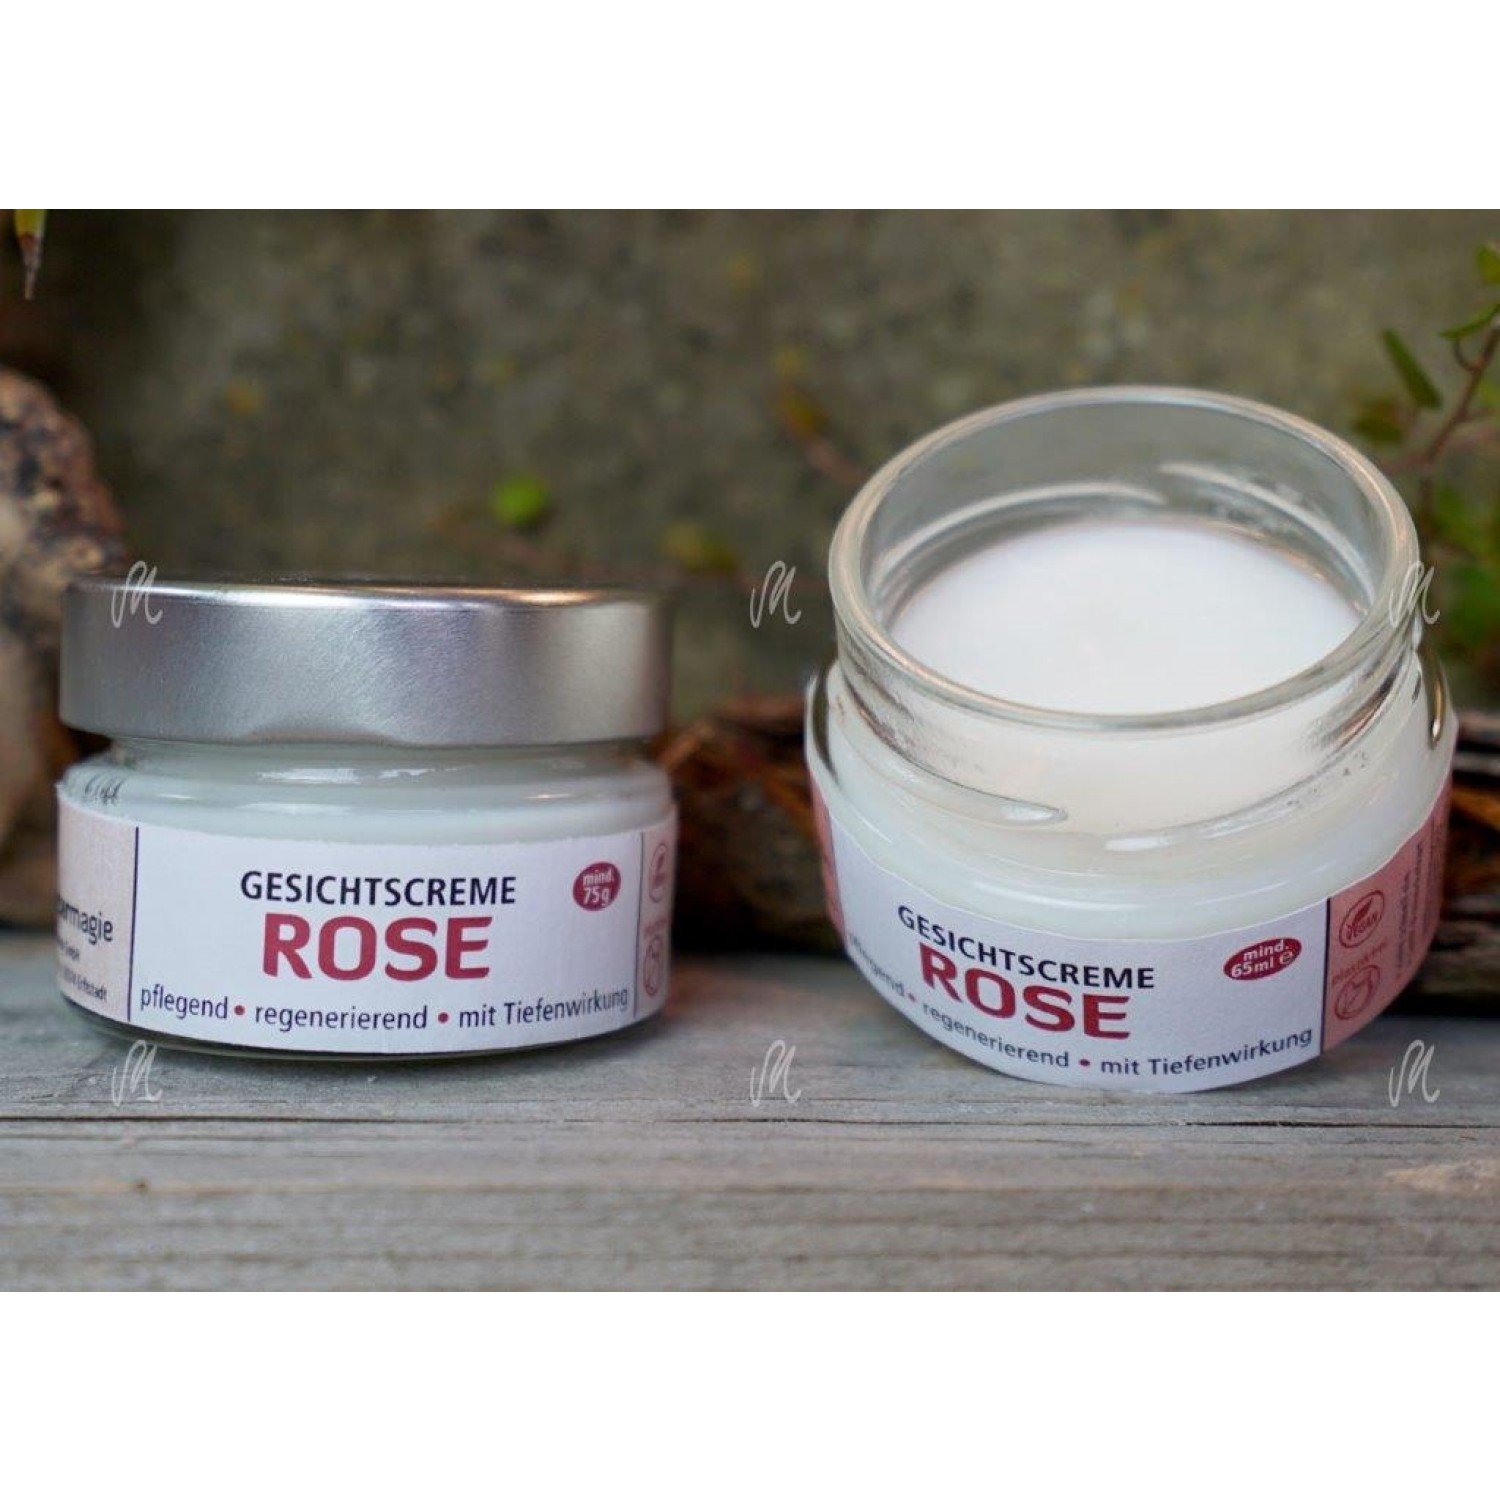 Rose Face Cream in Jar- natural cosmetics | Kraeutermagie